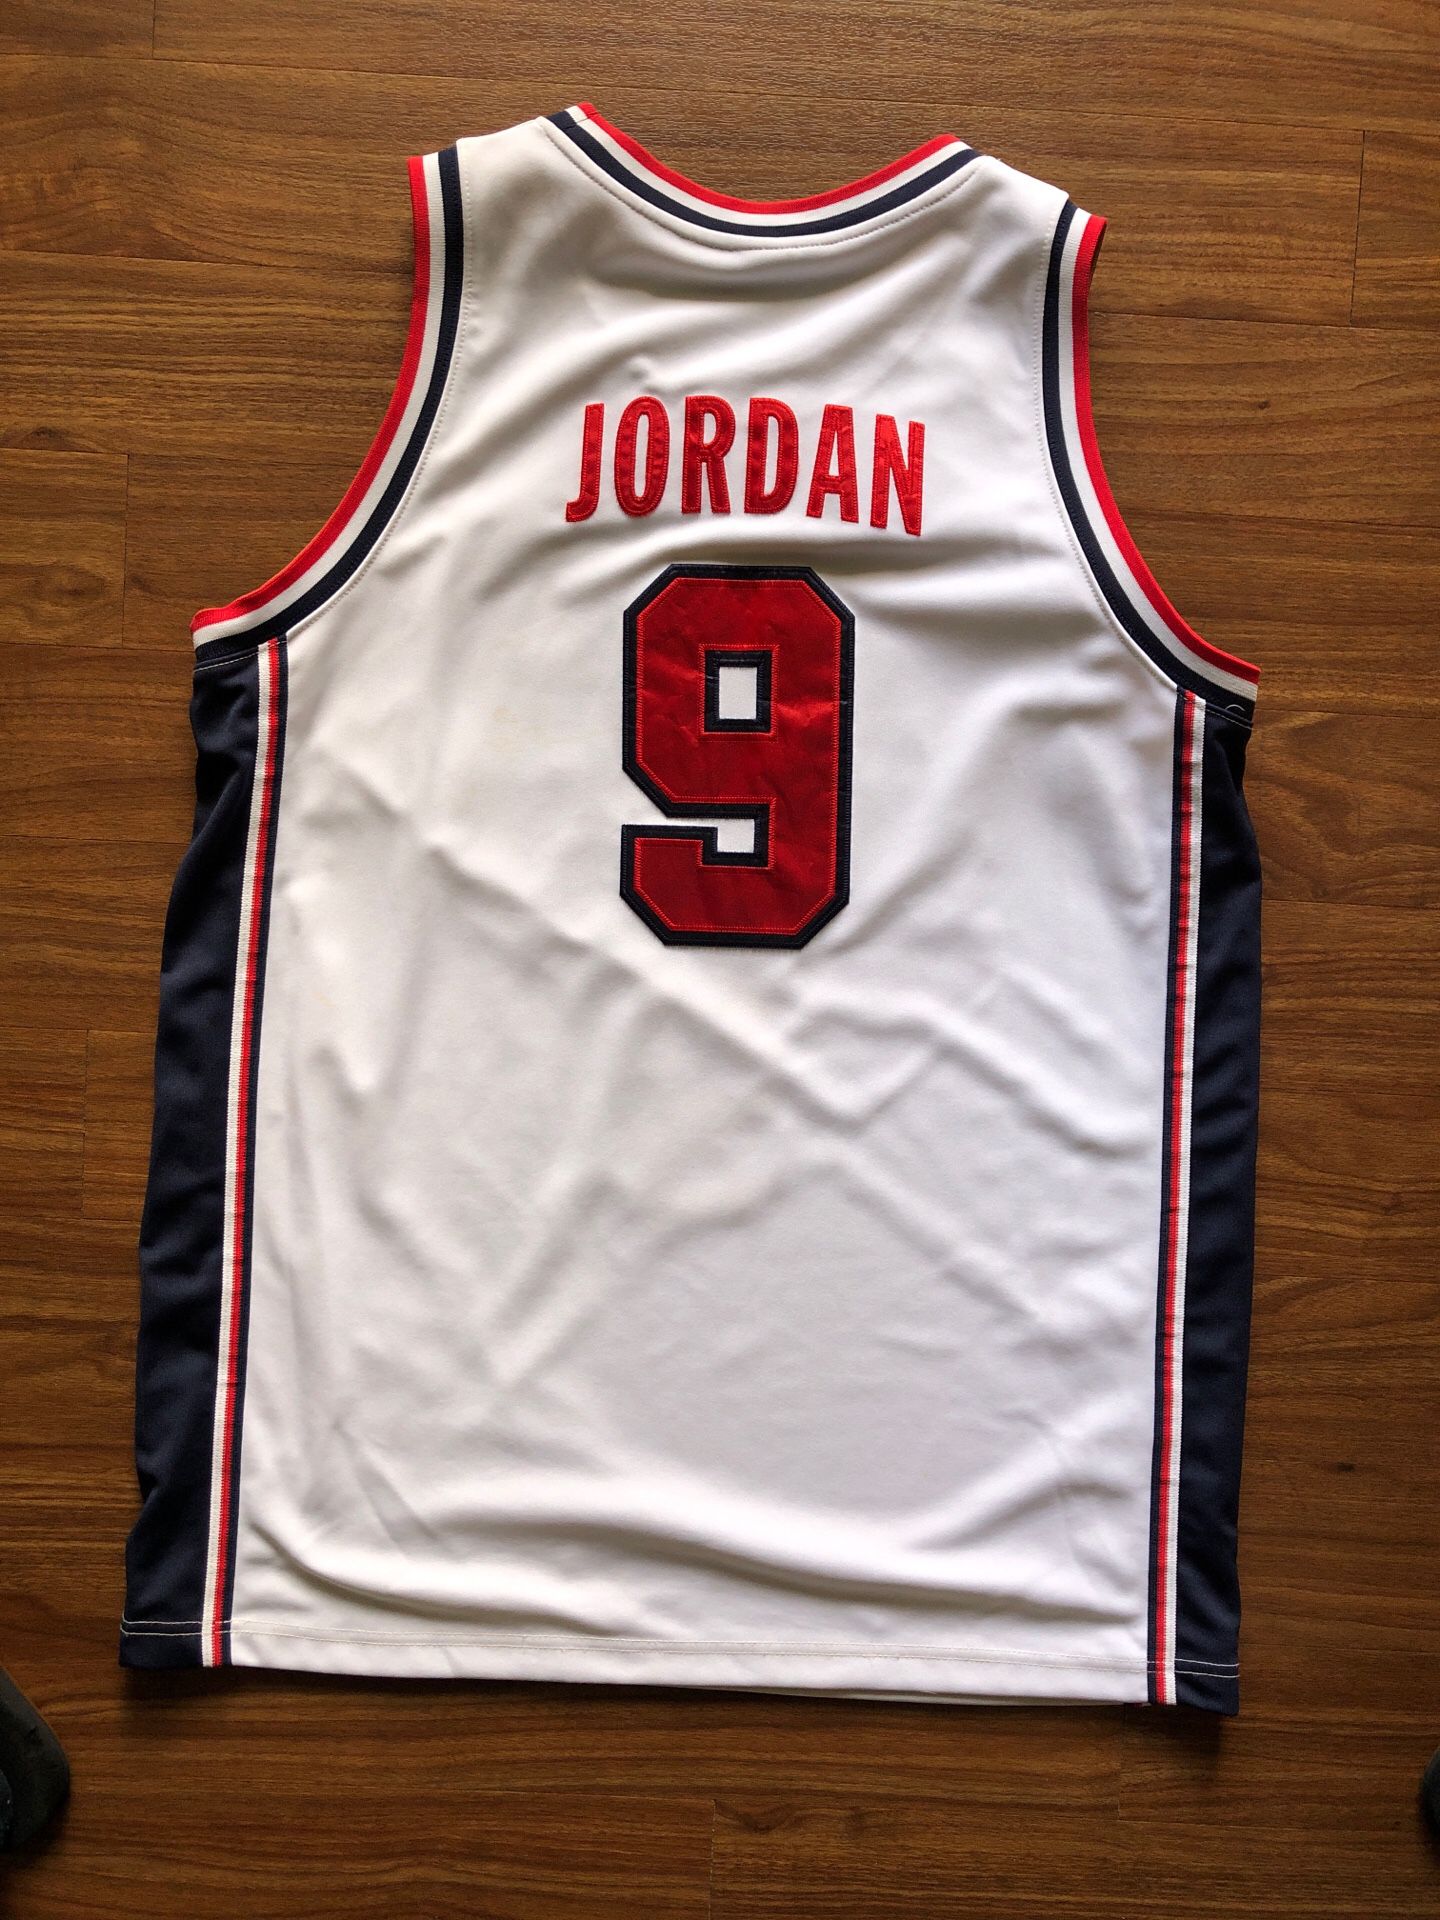 Michael Jordan Chicago White Sox Baseball Jersey for Sale in Oakland Park,  FL - OfferUp